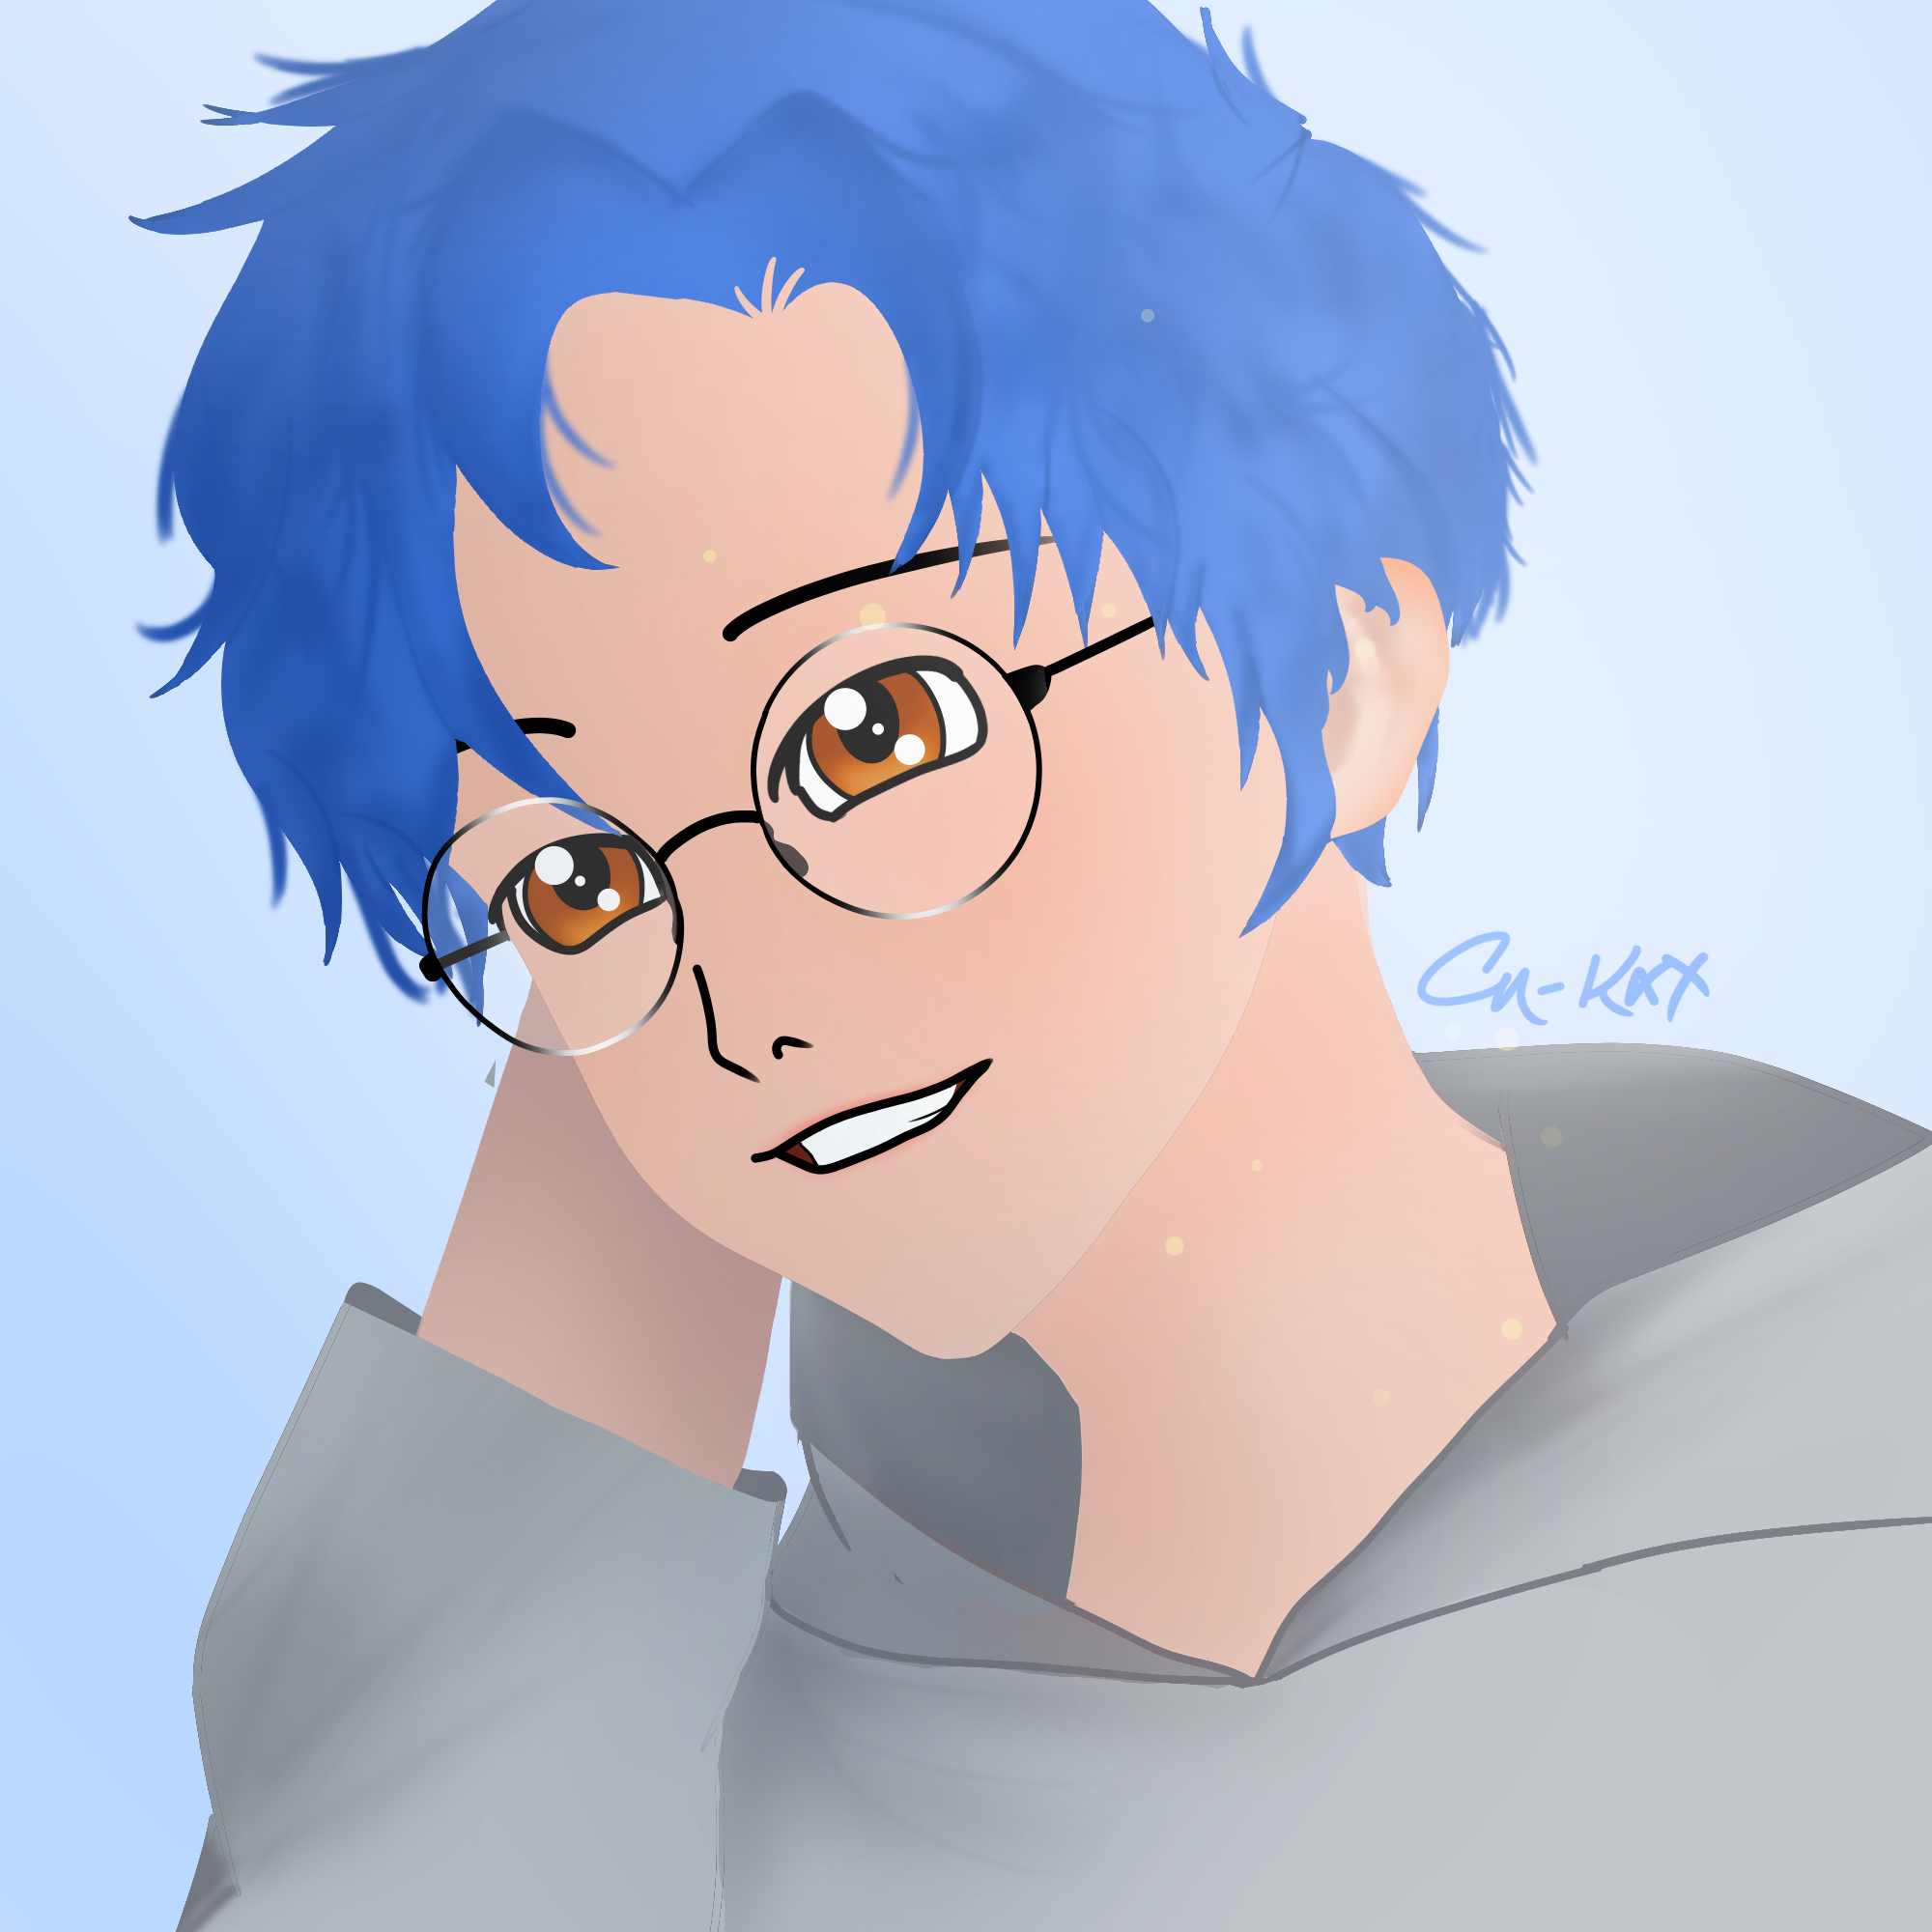 Anime boy with glasses by cikayda on DeviantArt